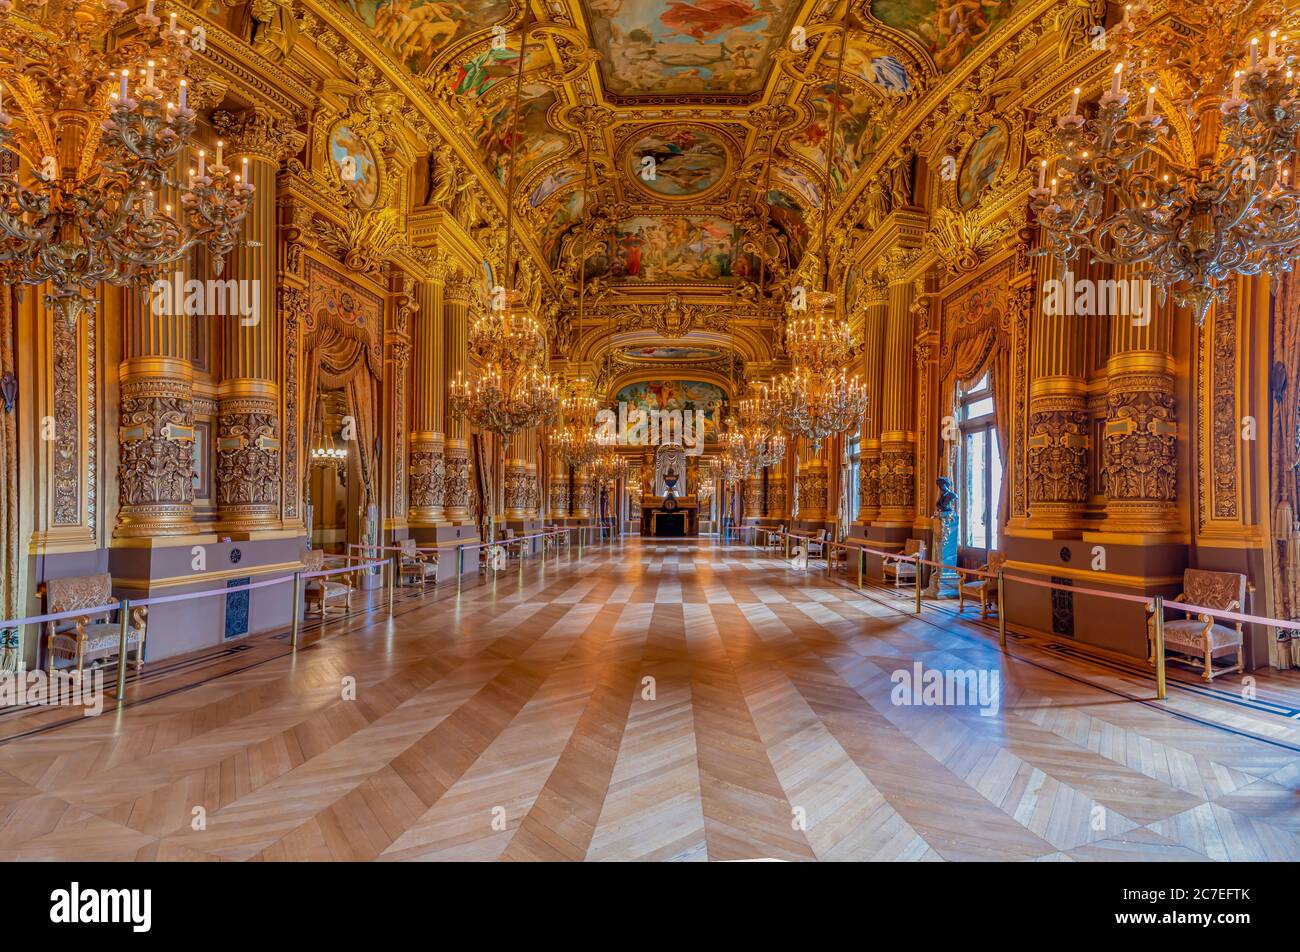 Paris, France - 06 19 2020: View inside Paris Opera Garnier Stock Photo